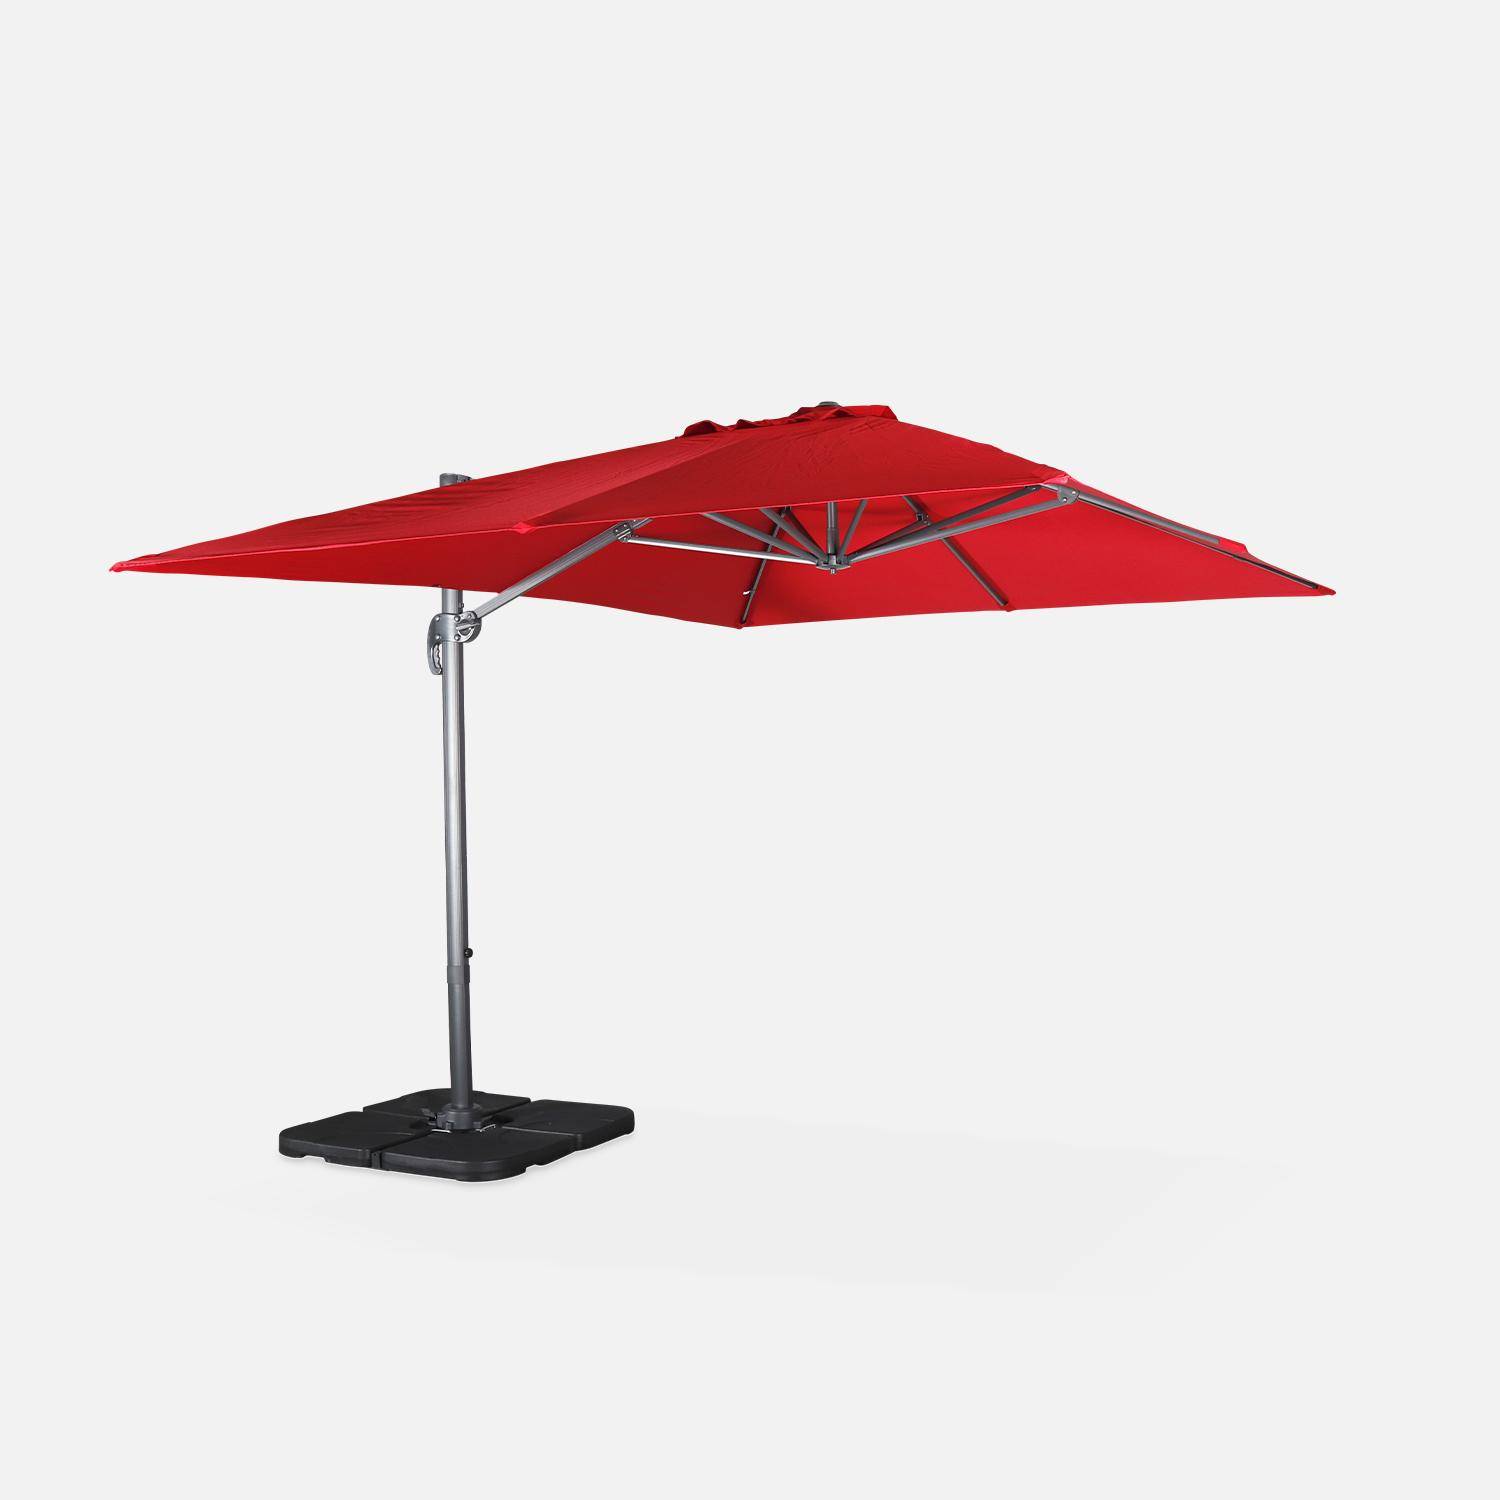 Rode rechthoekige parasol 3x4m + verzwaarde tegels 50x50cm,sweeek,Photo3